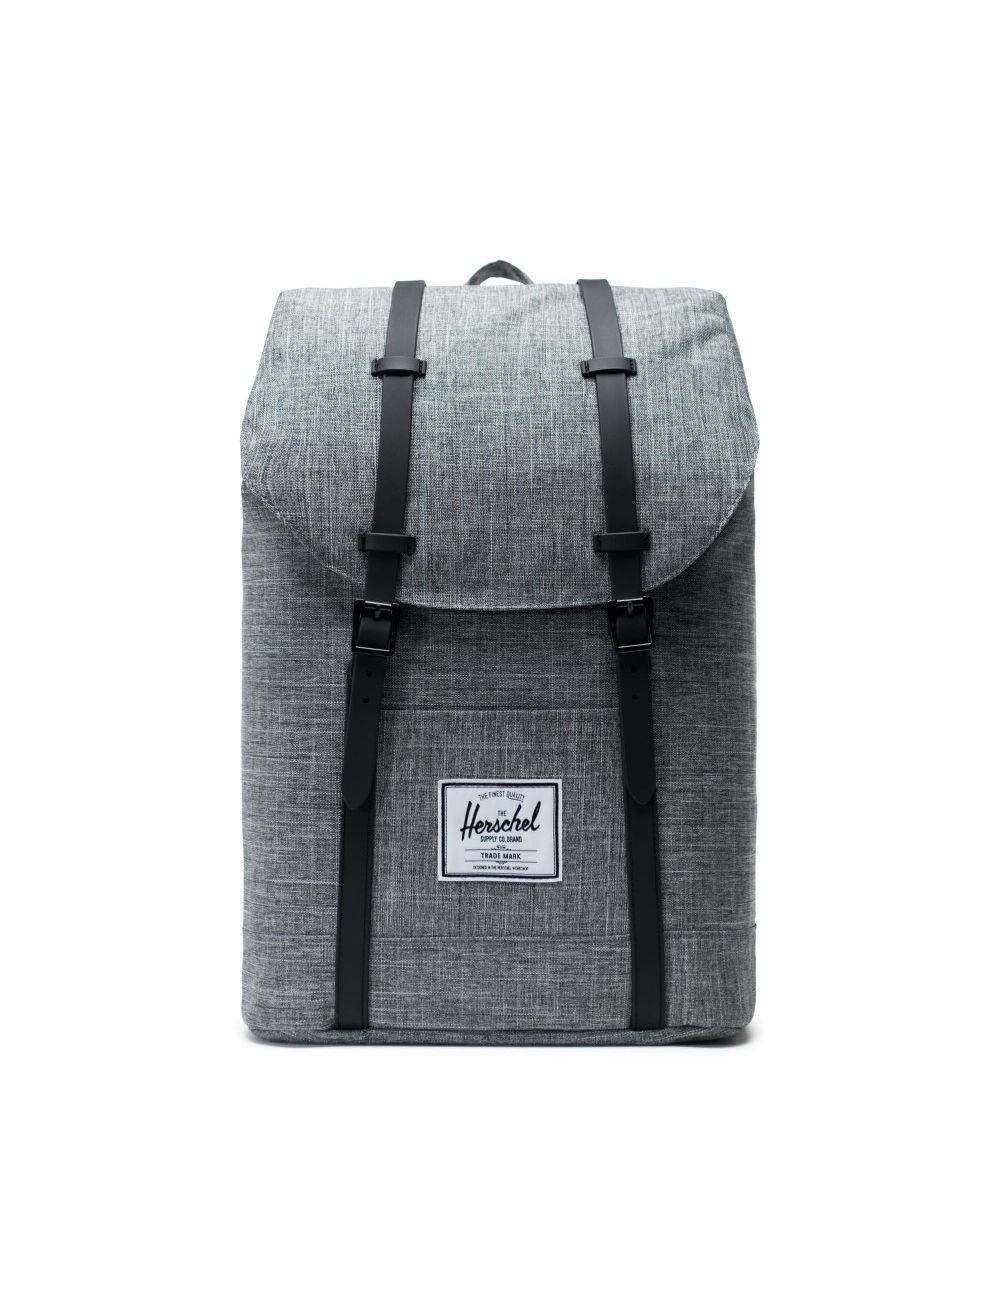 Рюкзак Herschel для женщин, серый, OS, EUR, 10066-01132-OS